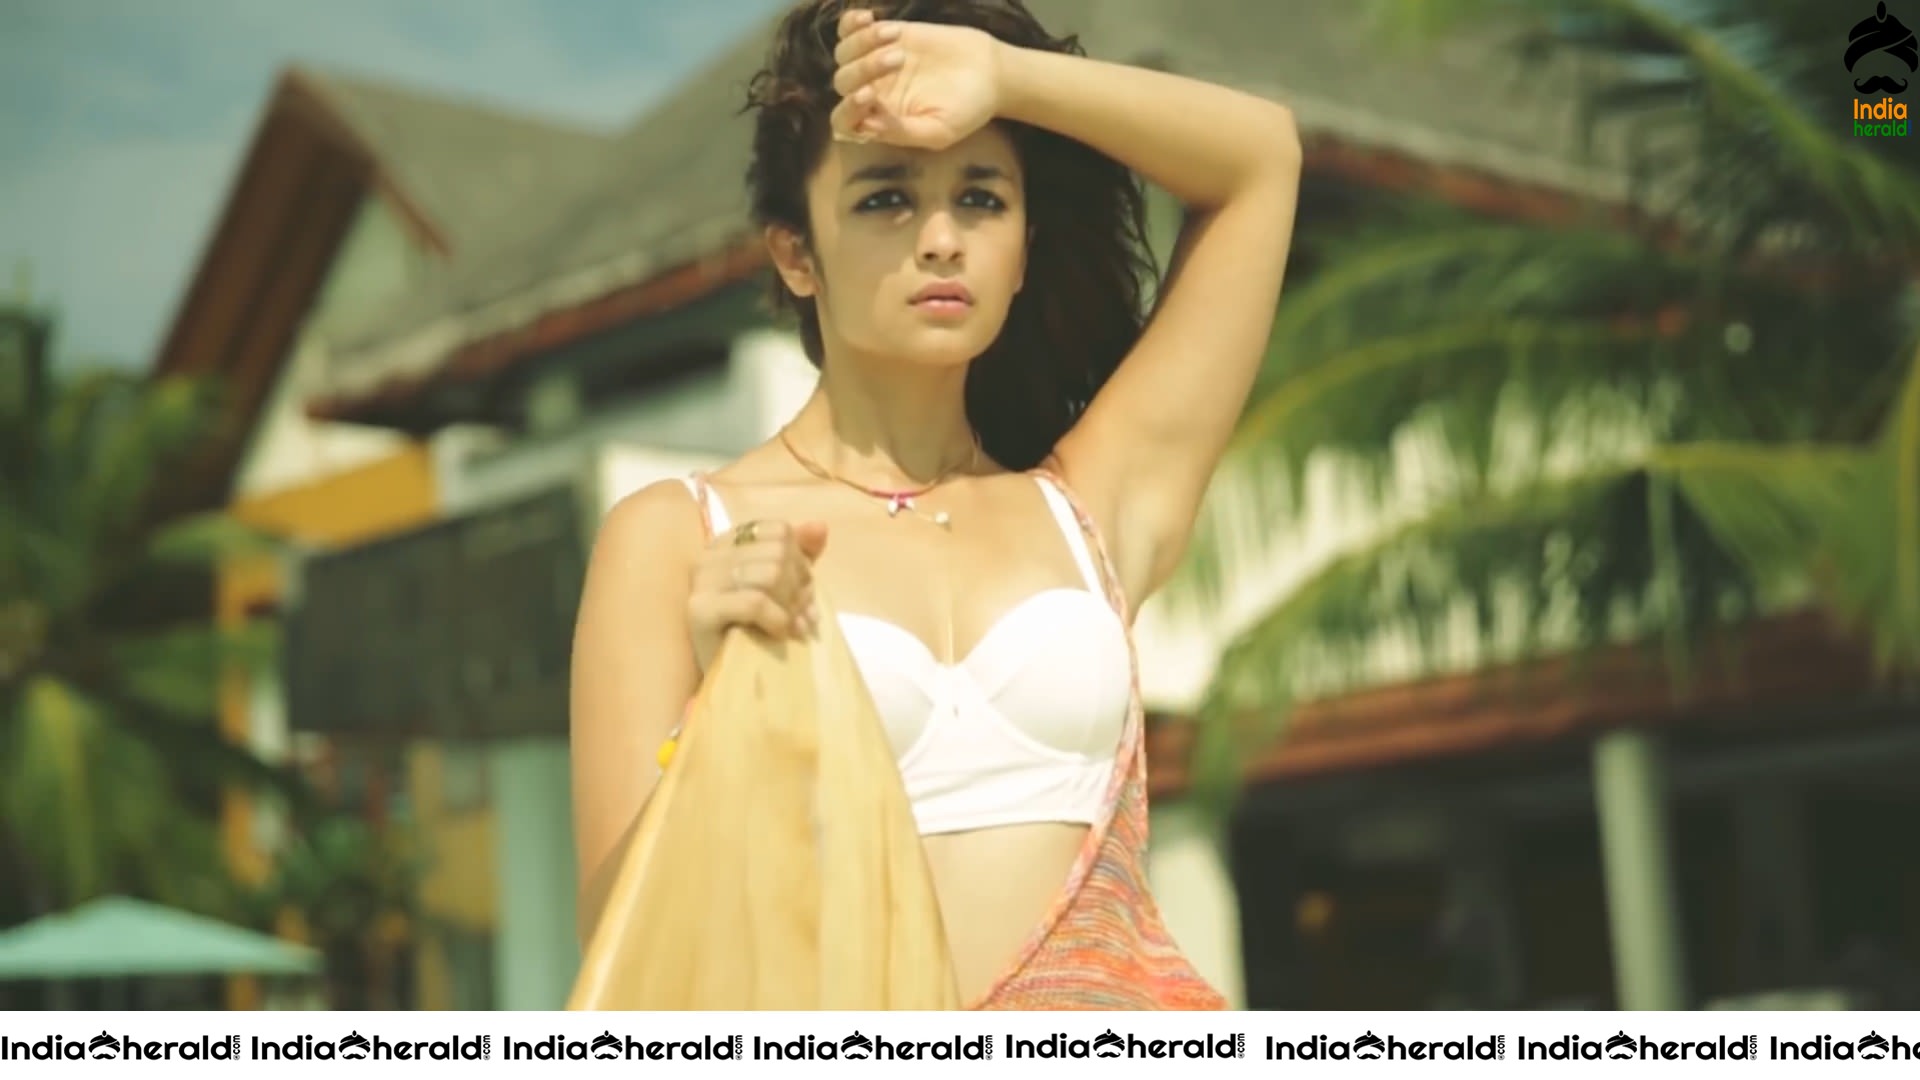 Alia Bhatt Sensuous and Hot Photoshoot clicks in Bikini by Beach Side Set 1